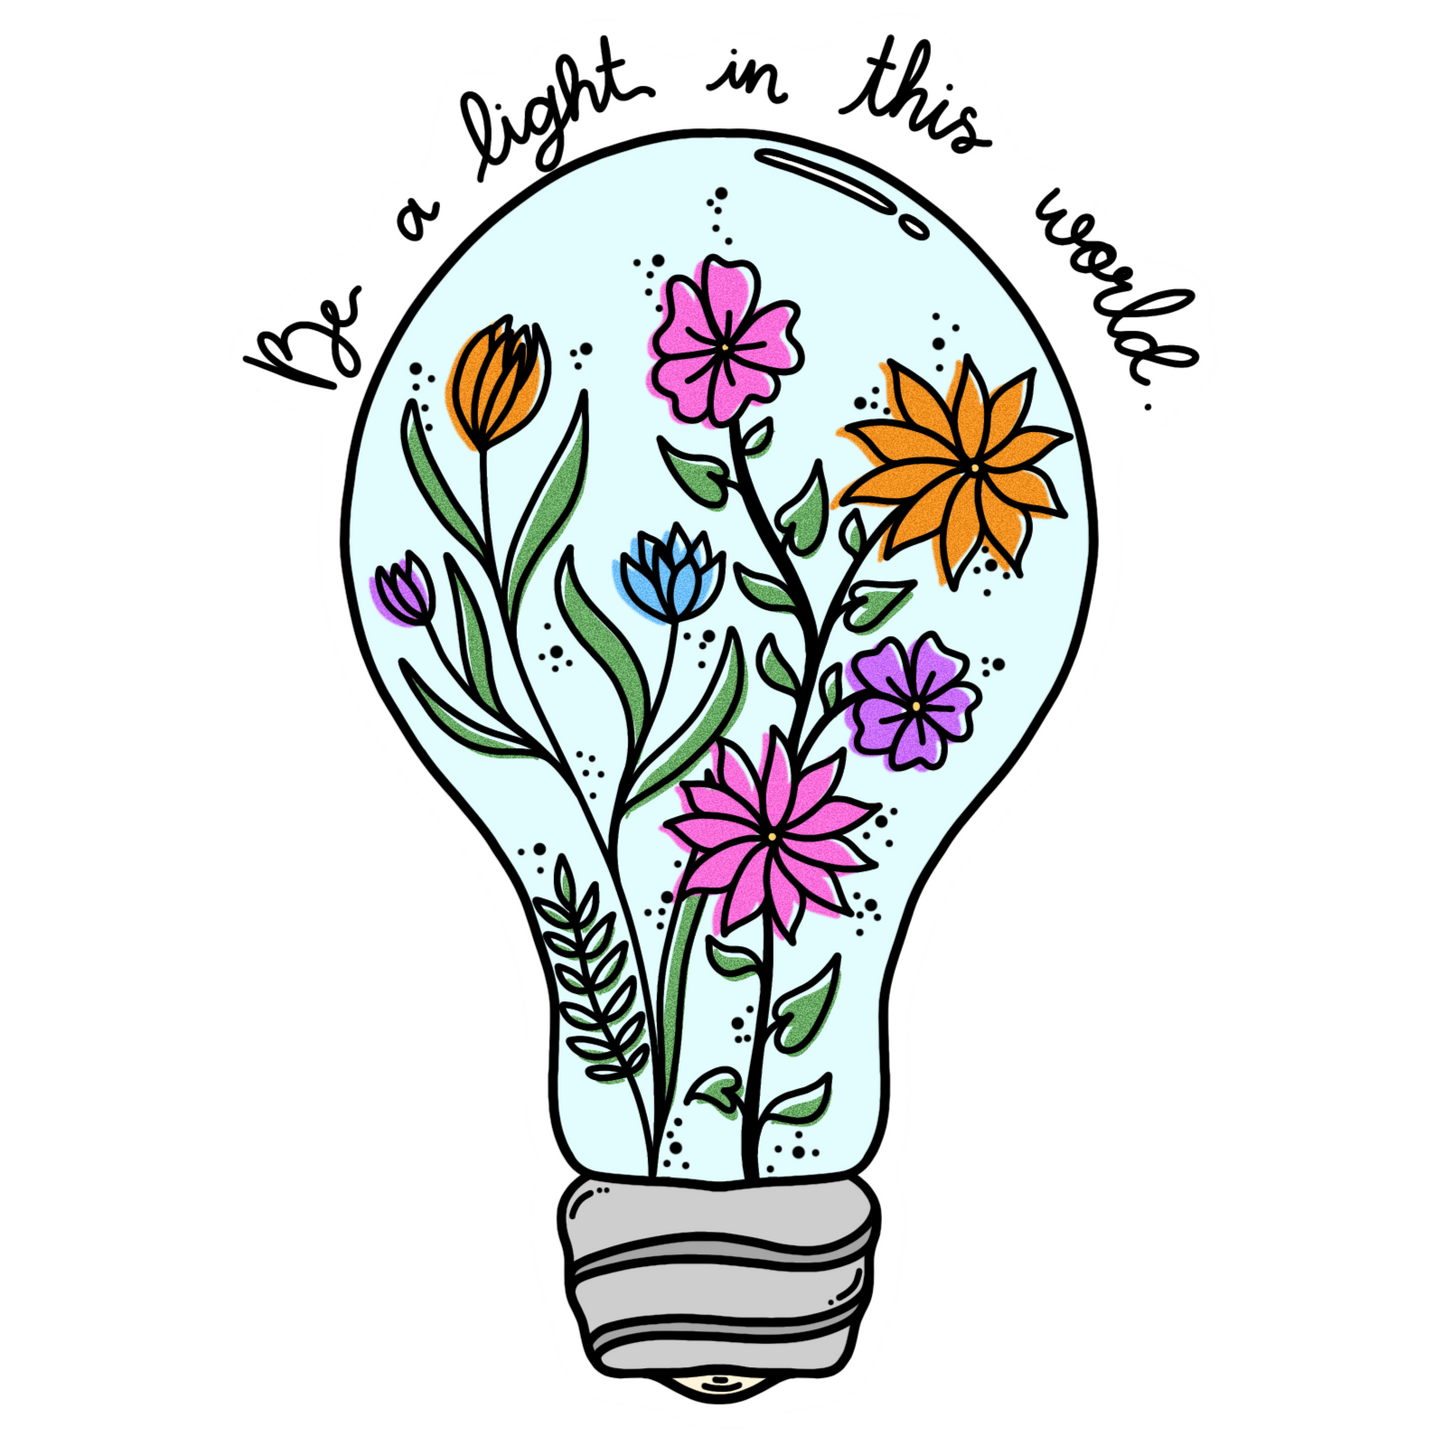 "Be a light in this world" Flowered Lightbulb Sticker